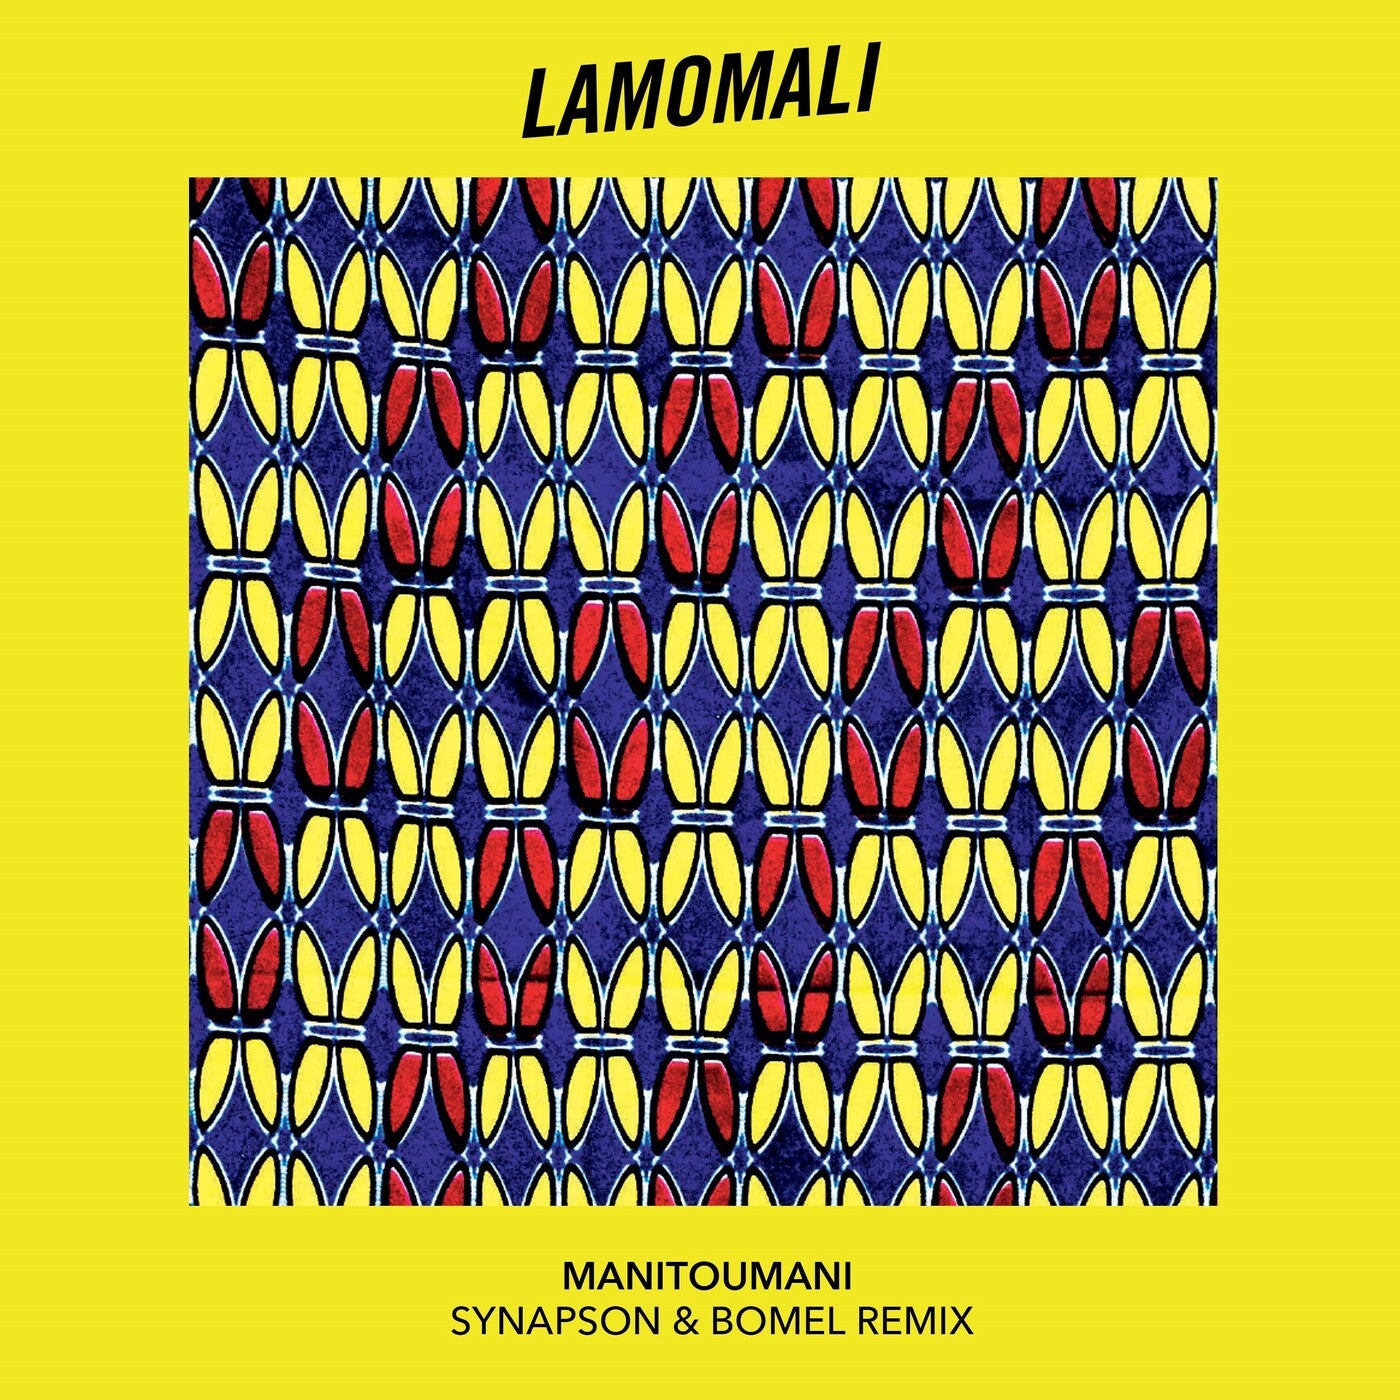 Manitoumani (feat. Toumani Diabate, Sidiki Diabate, Fatoumata Diawara) & Fatoumata Diawara (Lamomali X Synapson & Bomel Extended Remix)